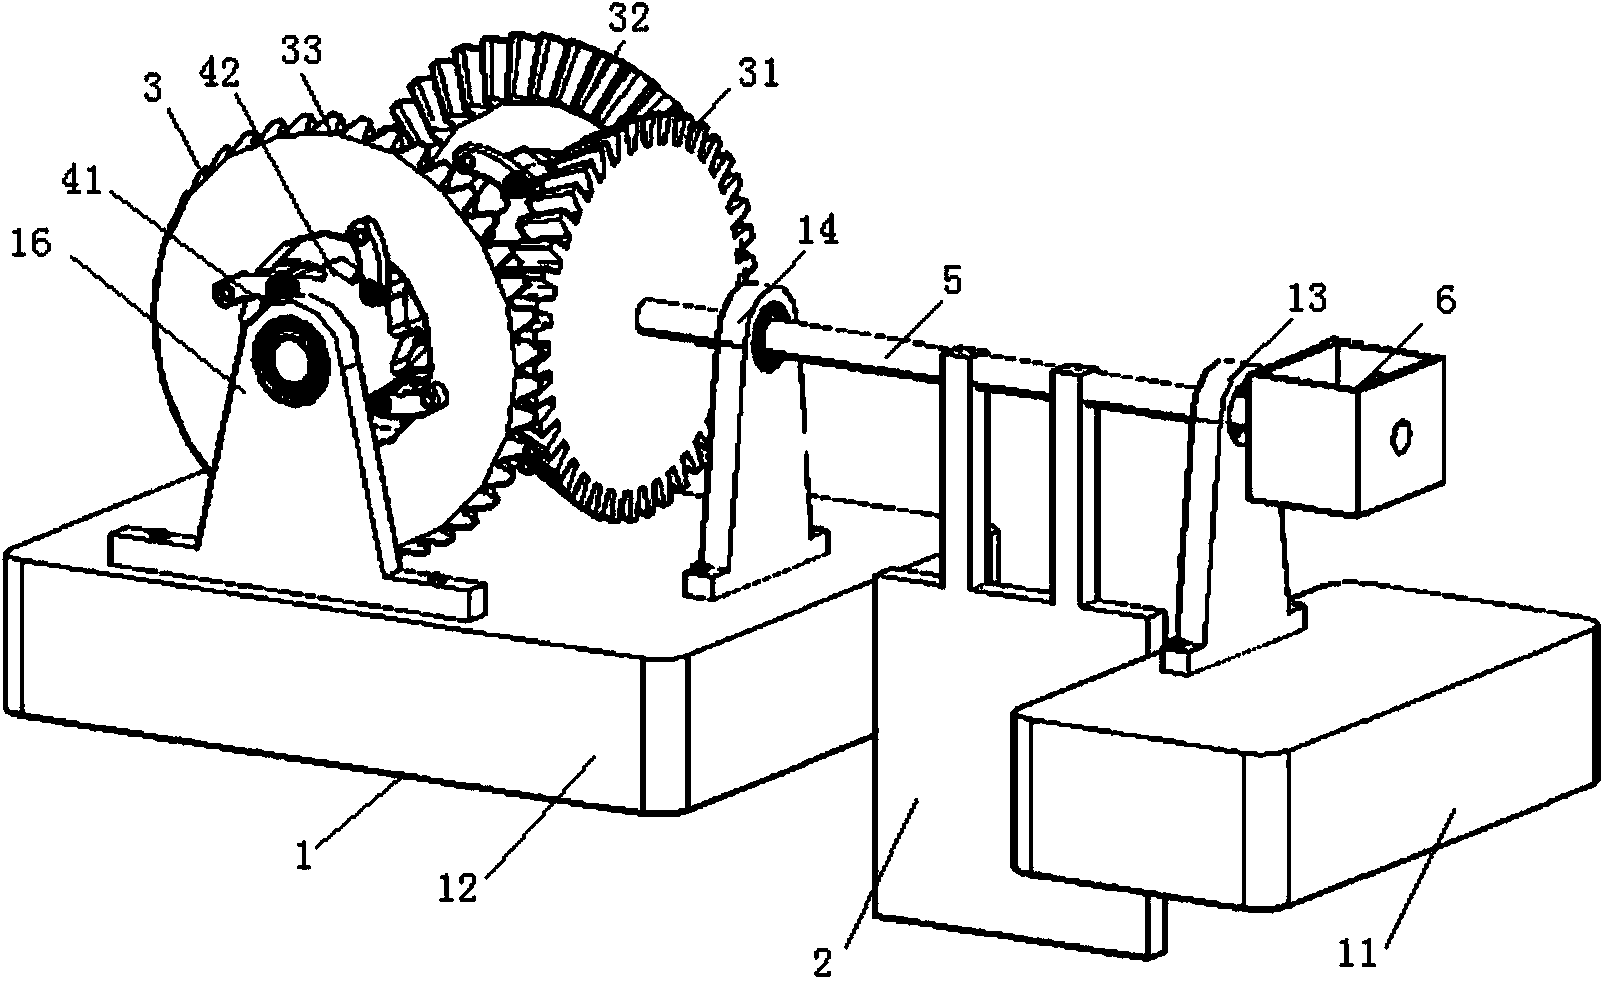 Pendulum wave power generating device